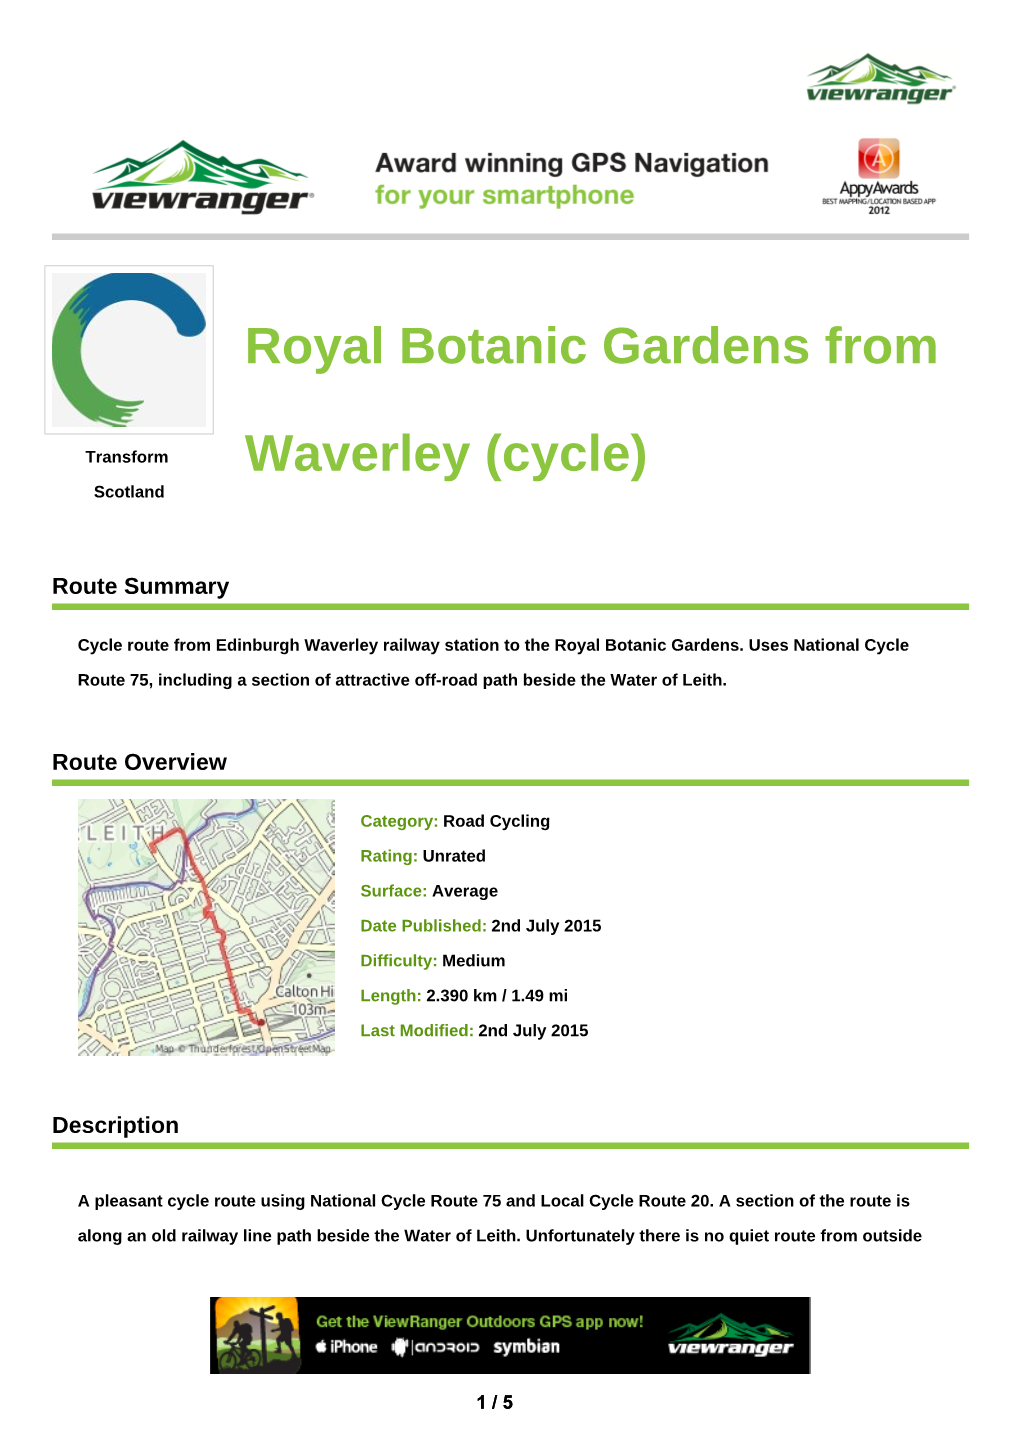 Royal Botanic Gardens from Waverley (Cycle)